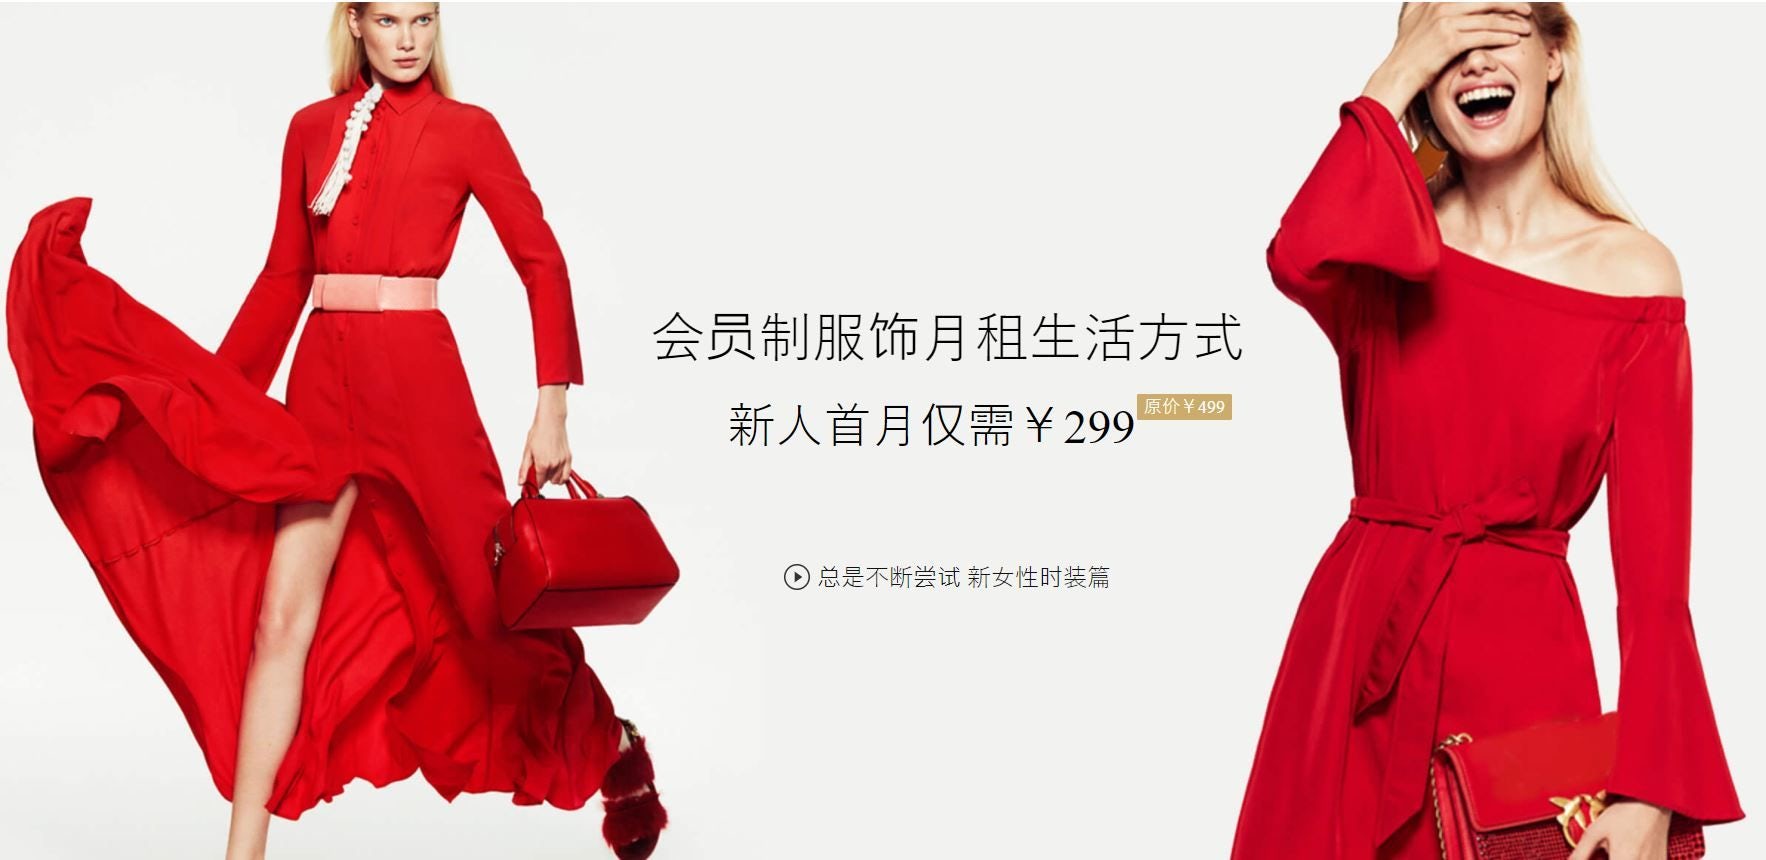 Luxury Clothing Rentals Rise as China Embraces the Sharing Economy